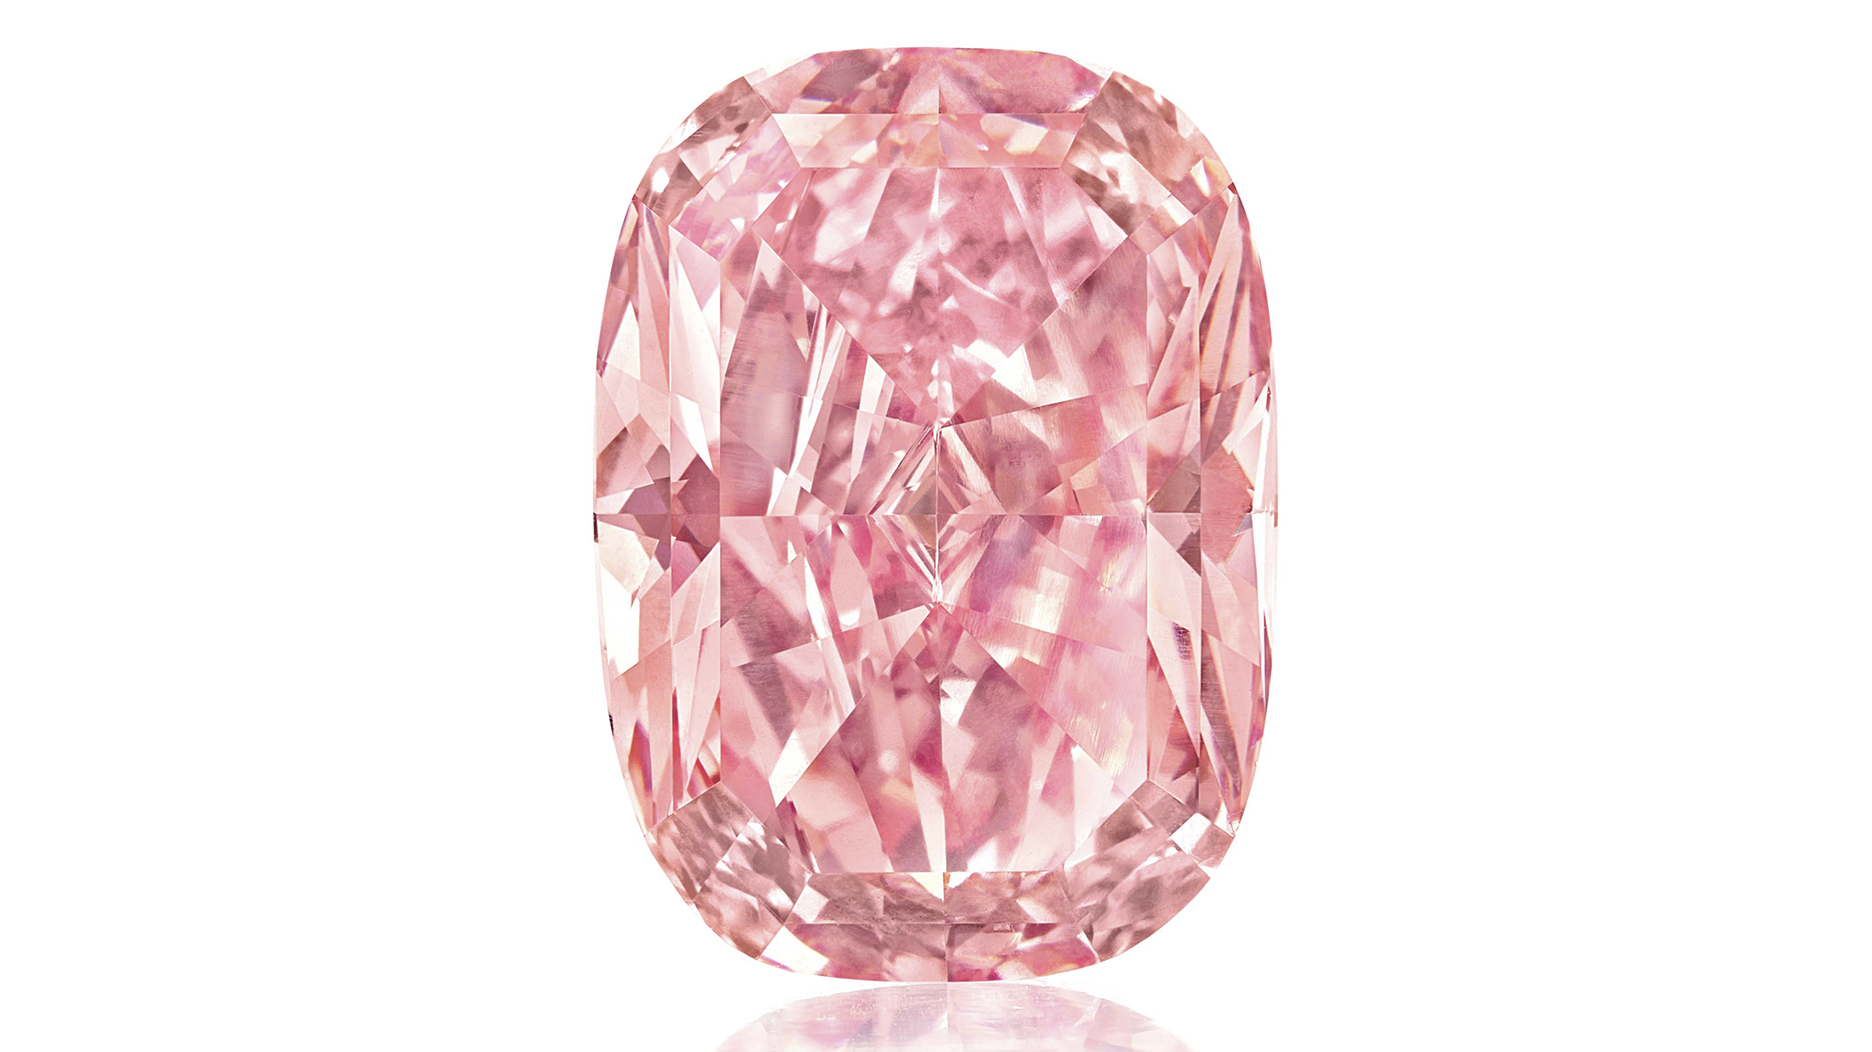 Williamson Pink Star' Diamond Sets Auction Record at $57.7M